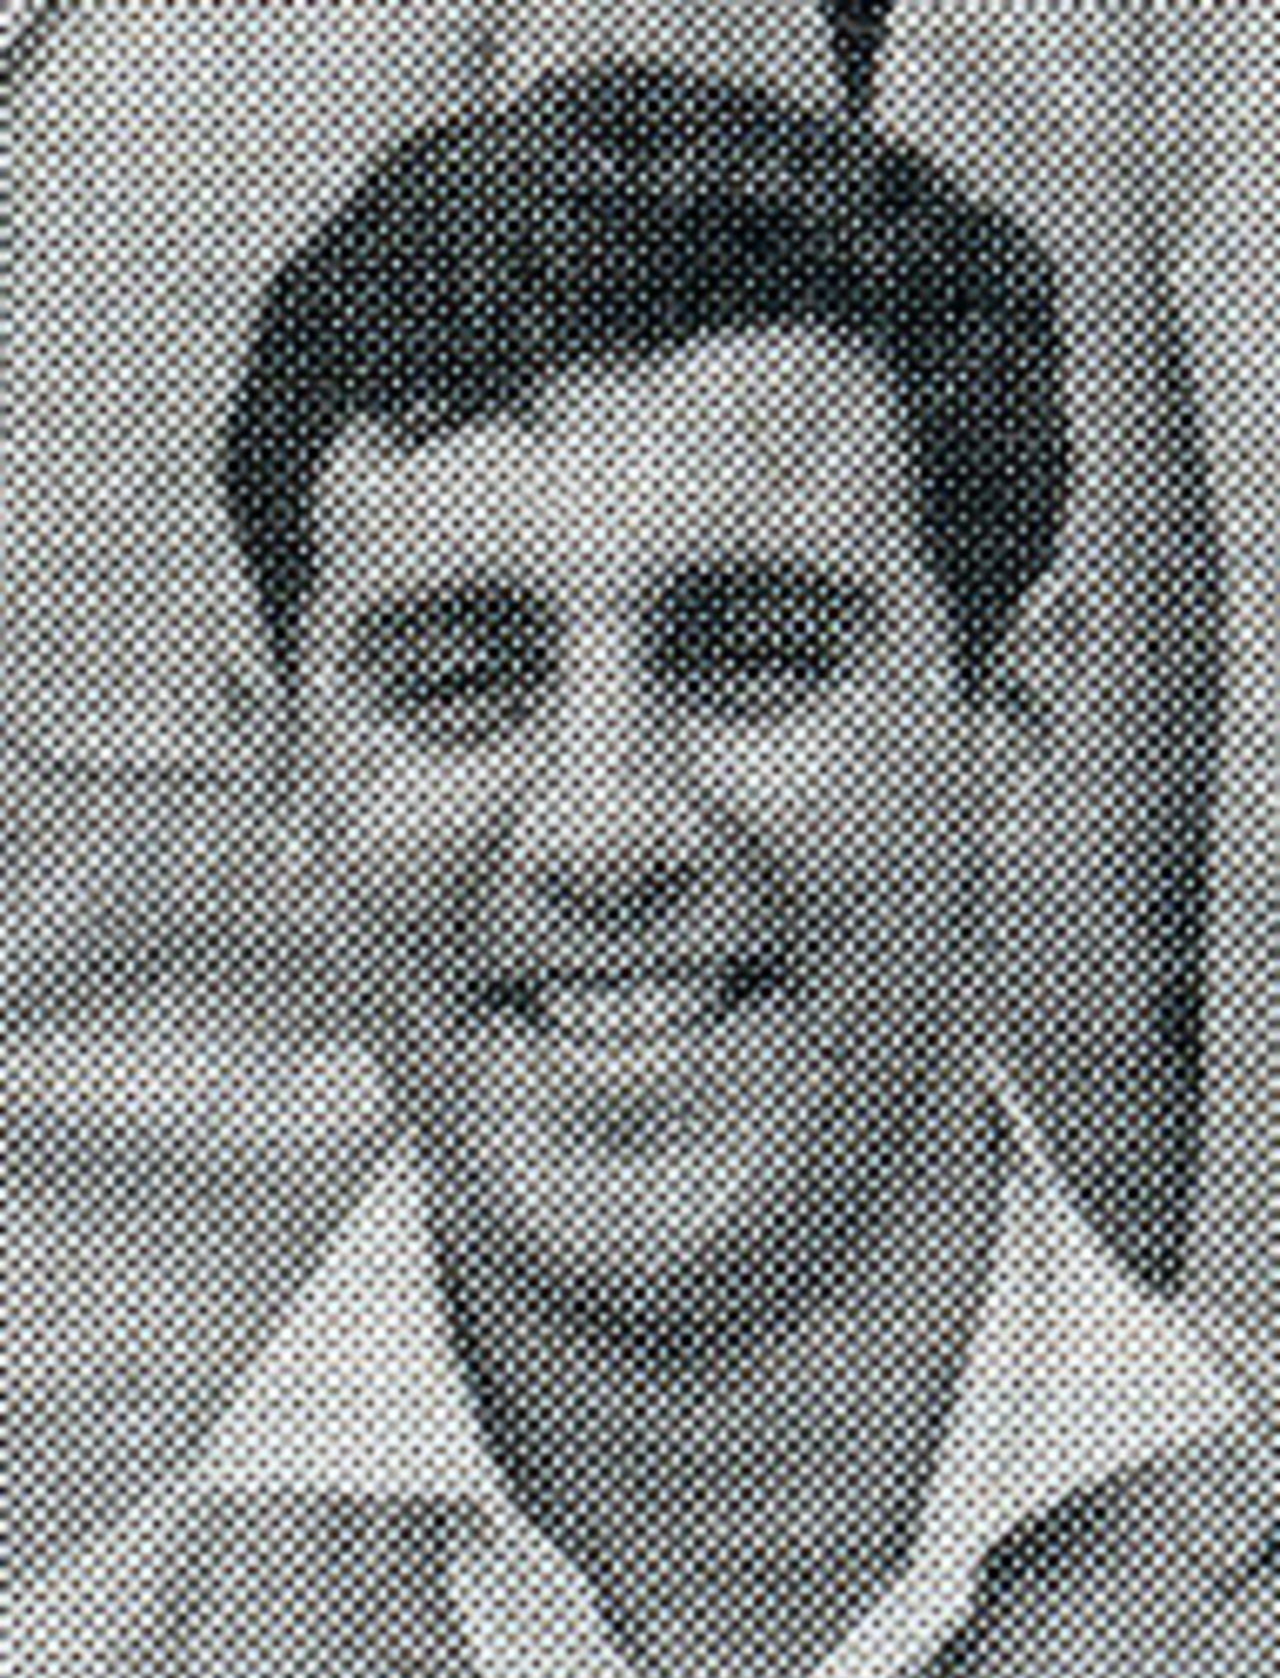 Mike Brearley as Cambridge captain in 1963